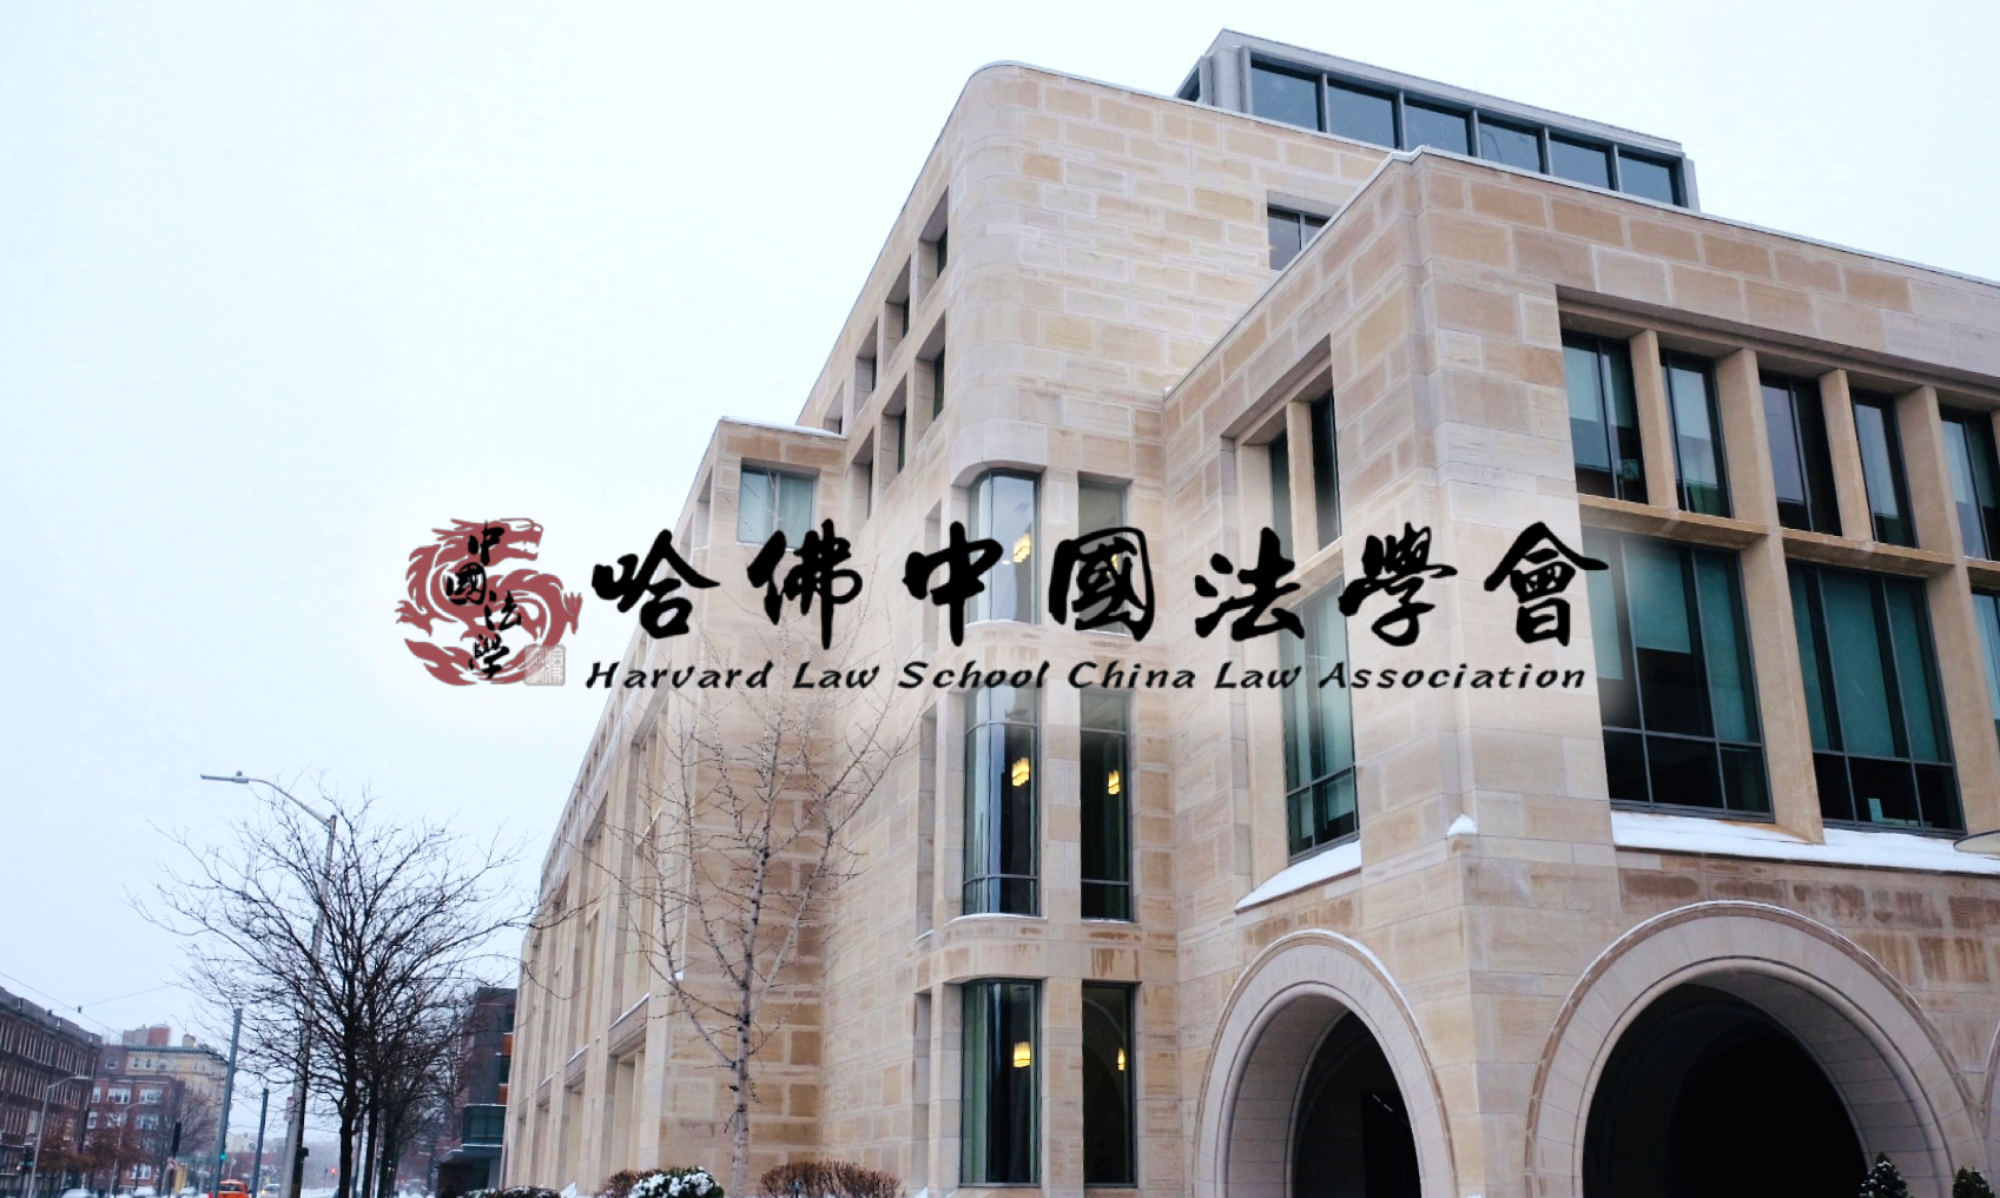 Harvard Law School China Law Association